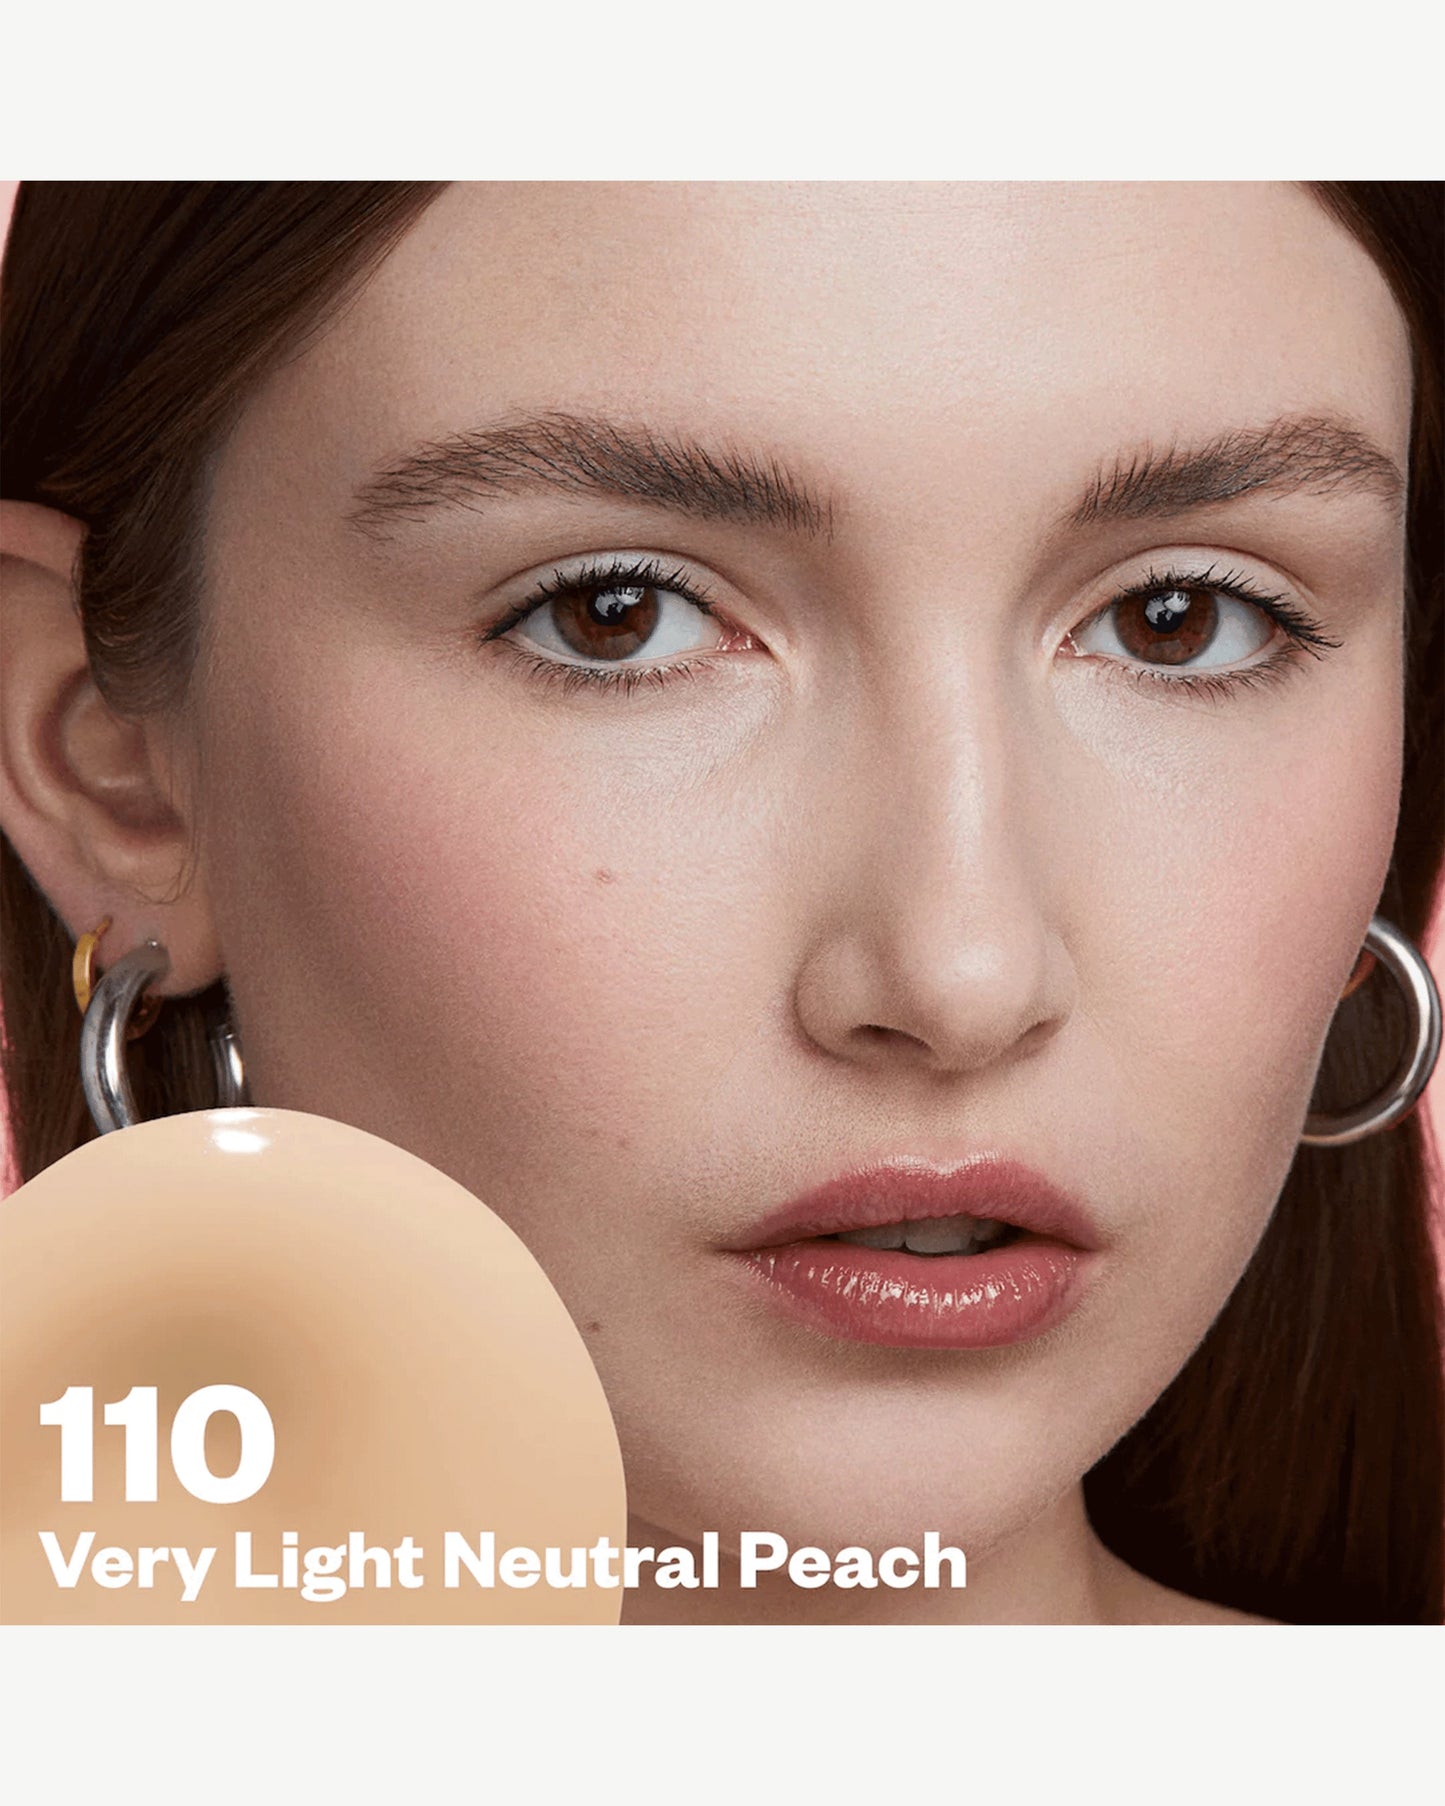 Very Light Neutral 110 (very light with neutral peach undertones)